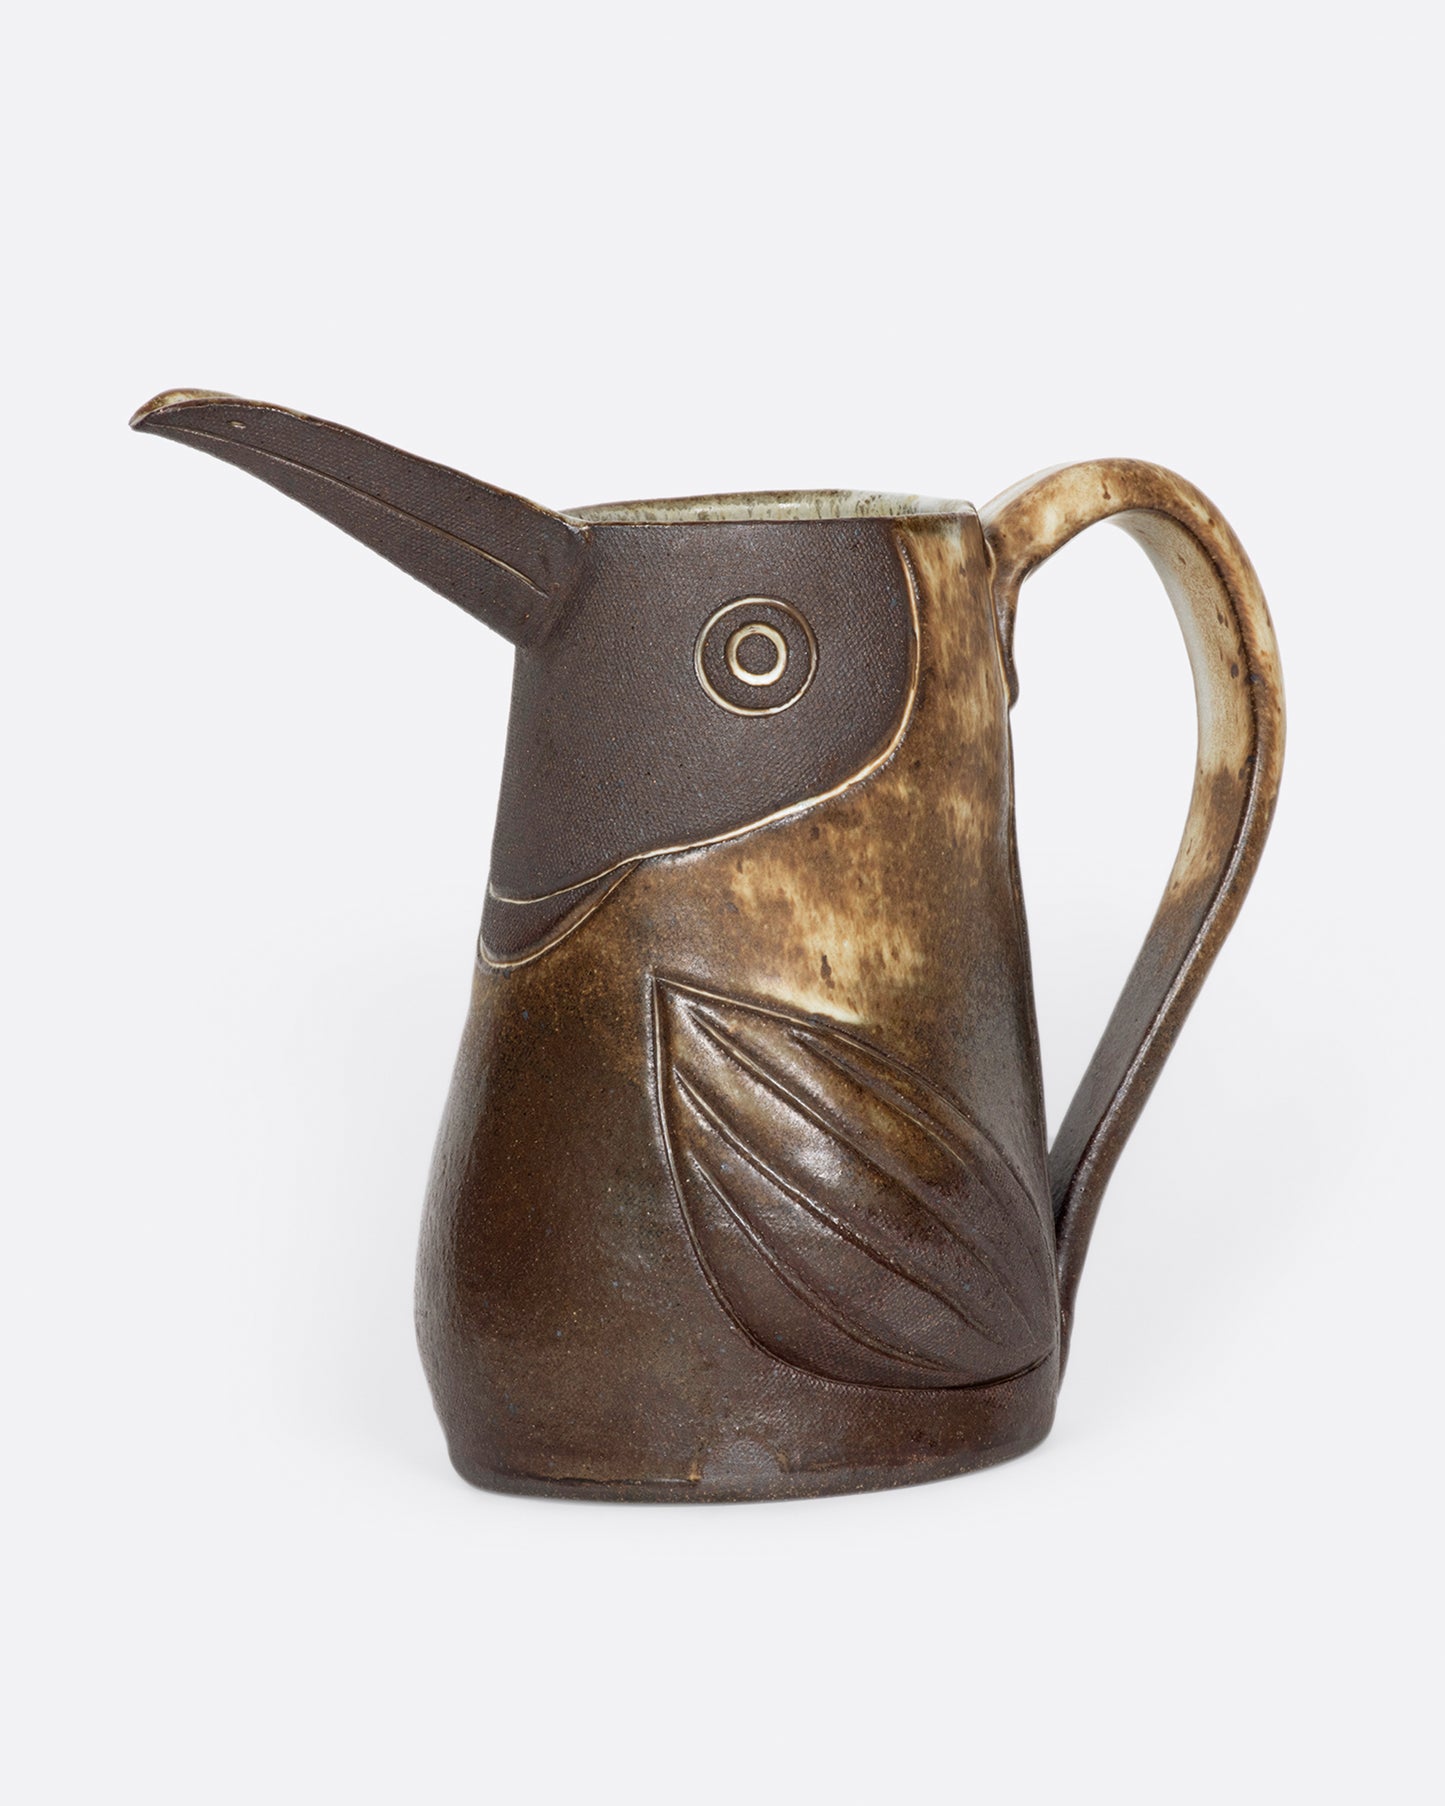 An espresso brown bird pitcher with white glaze speckles.